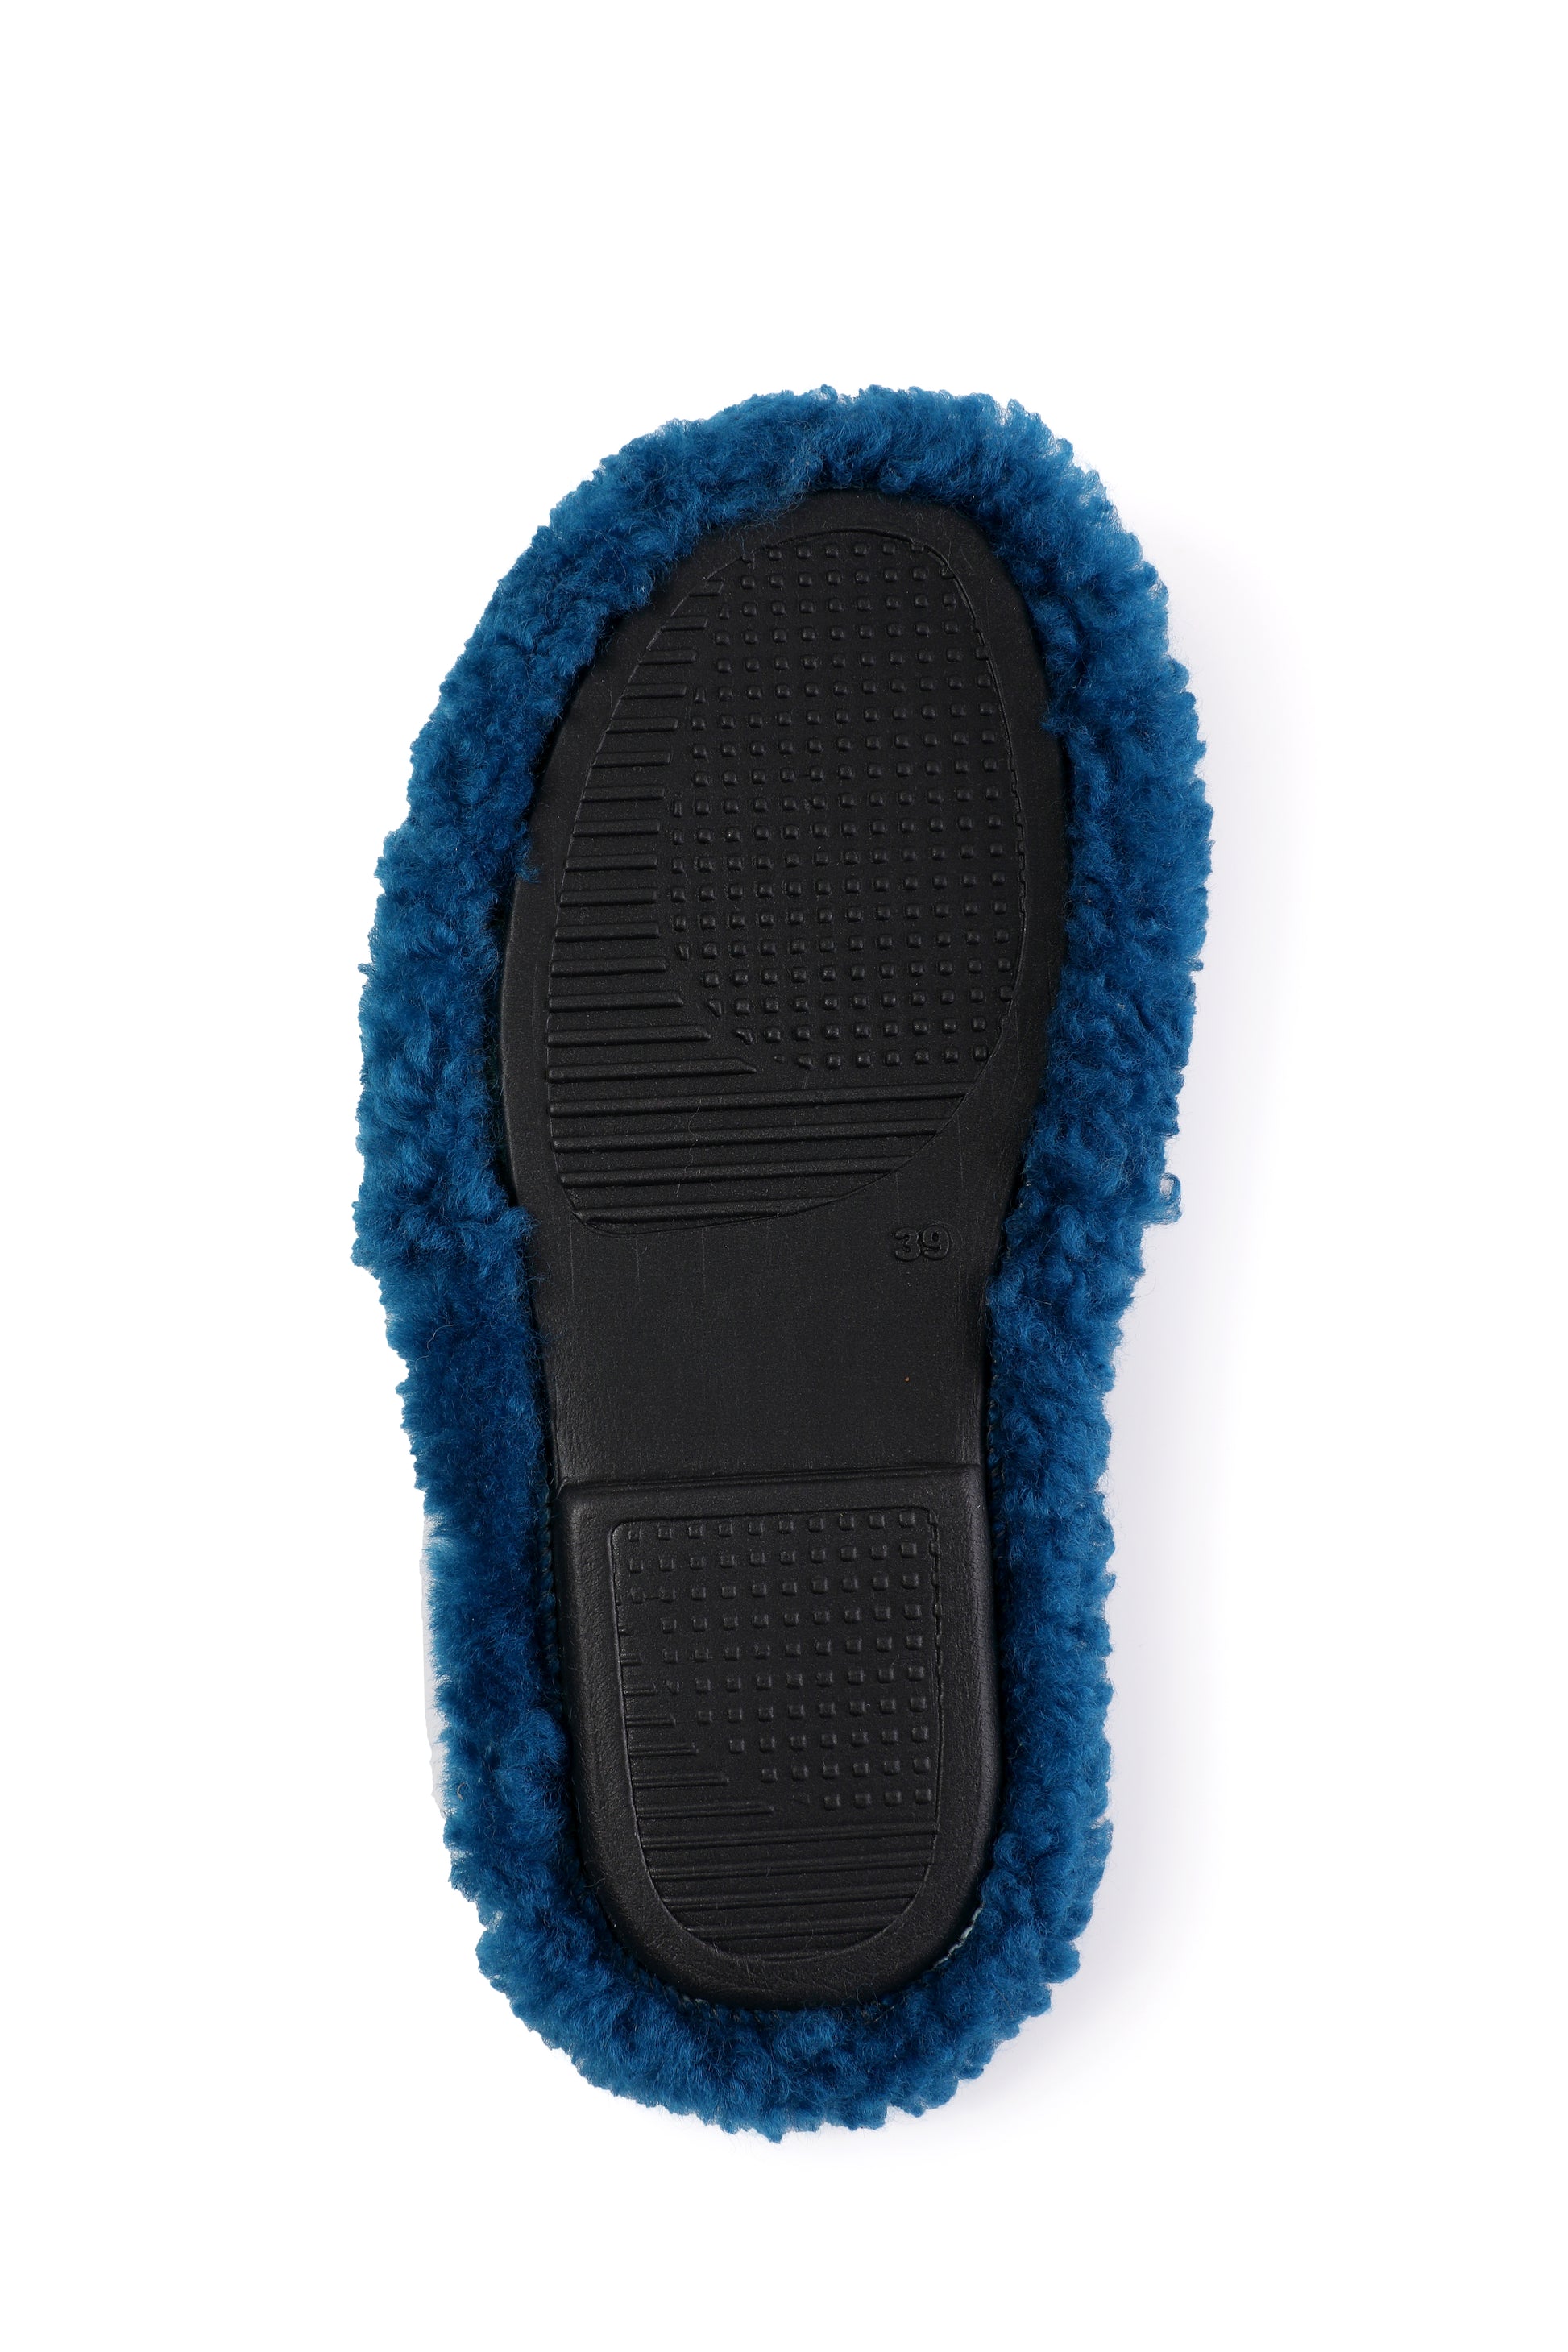 Open Toe Soft Blue Sheepskin Slippers with Blue Fur Lining